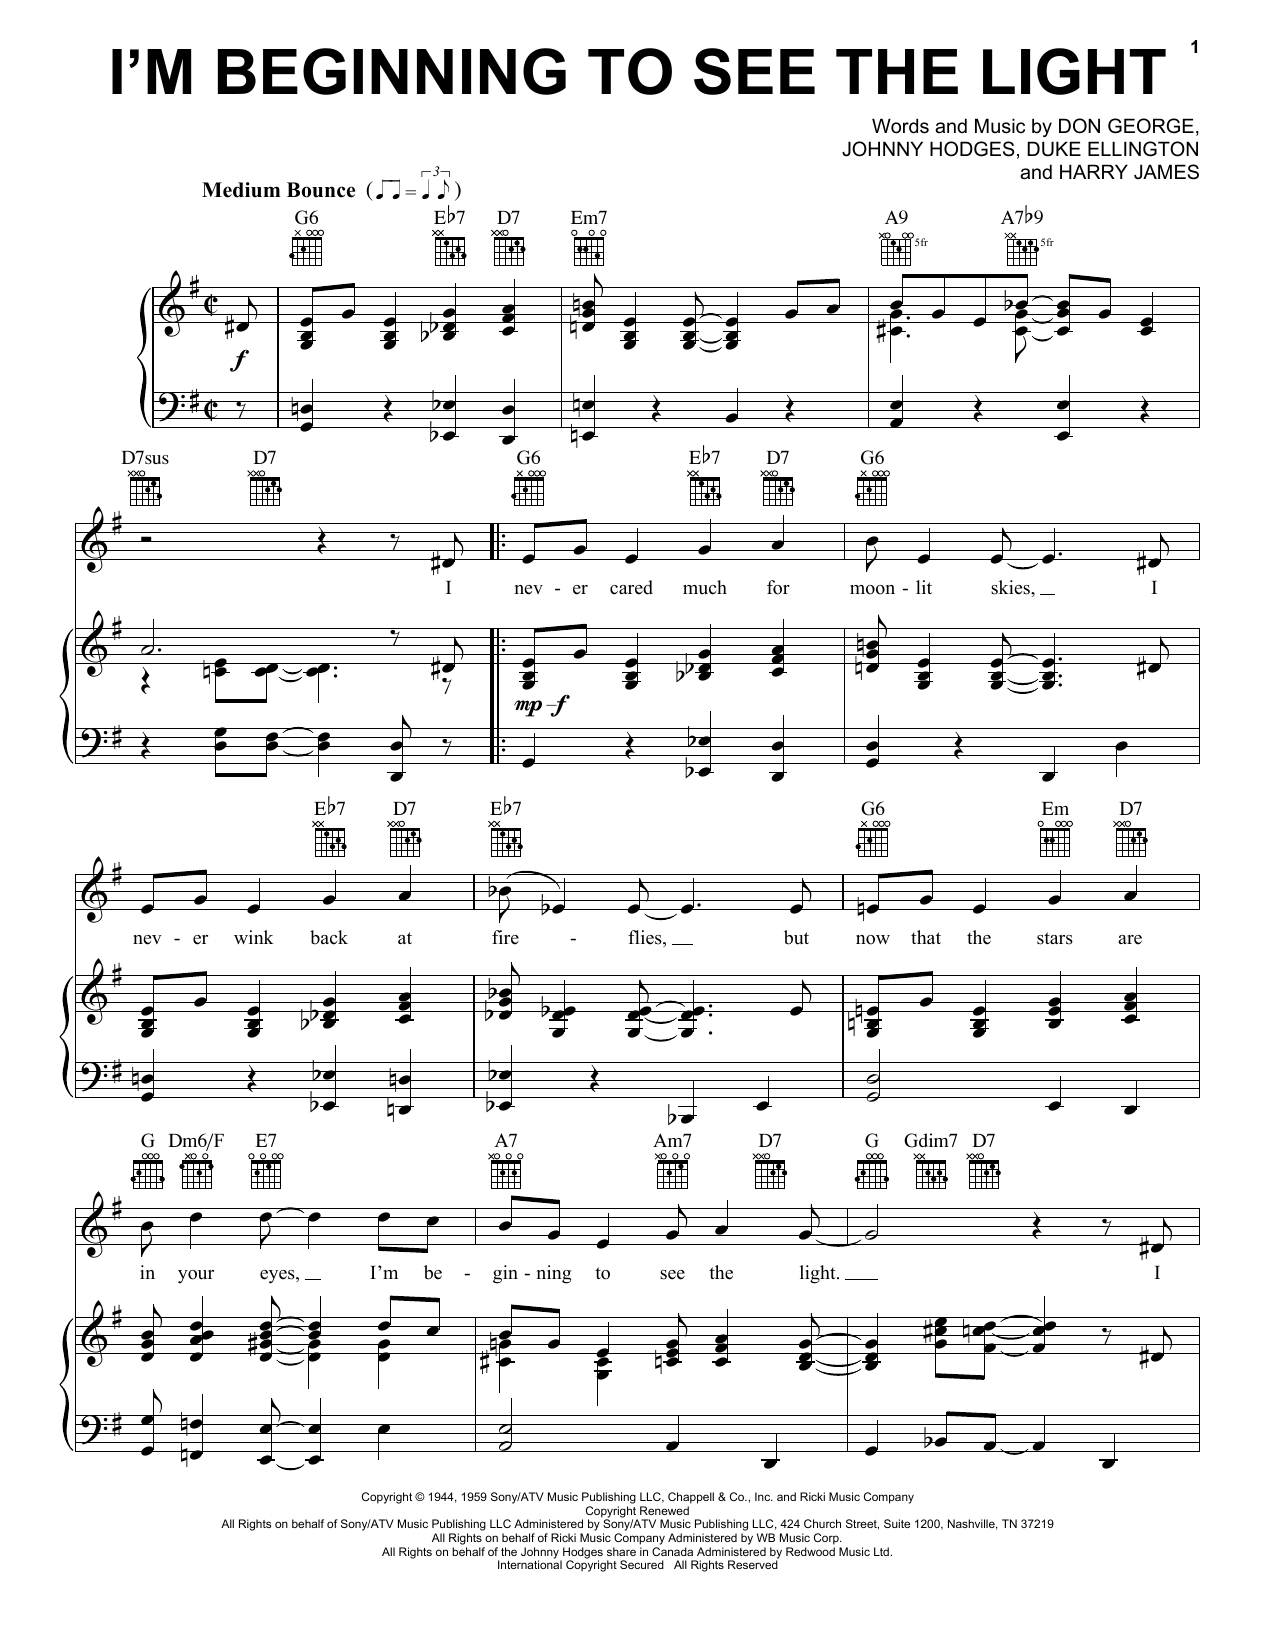 Duke Ellington I'm Beginning To See The Light Sheet Music Notes & Chords for Viola - Download or Print PDF